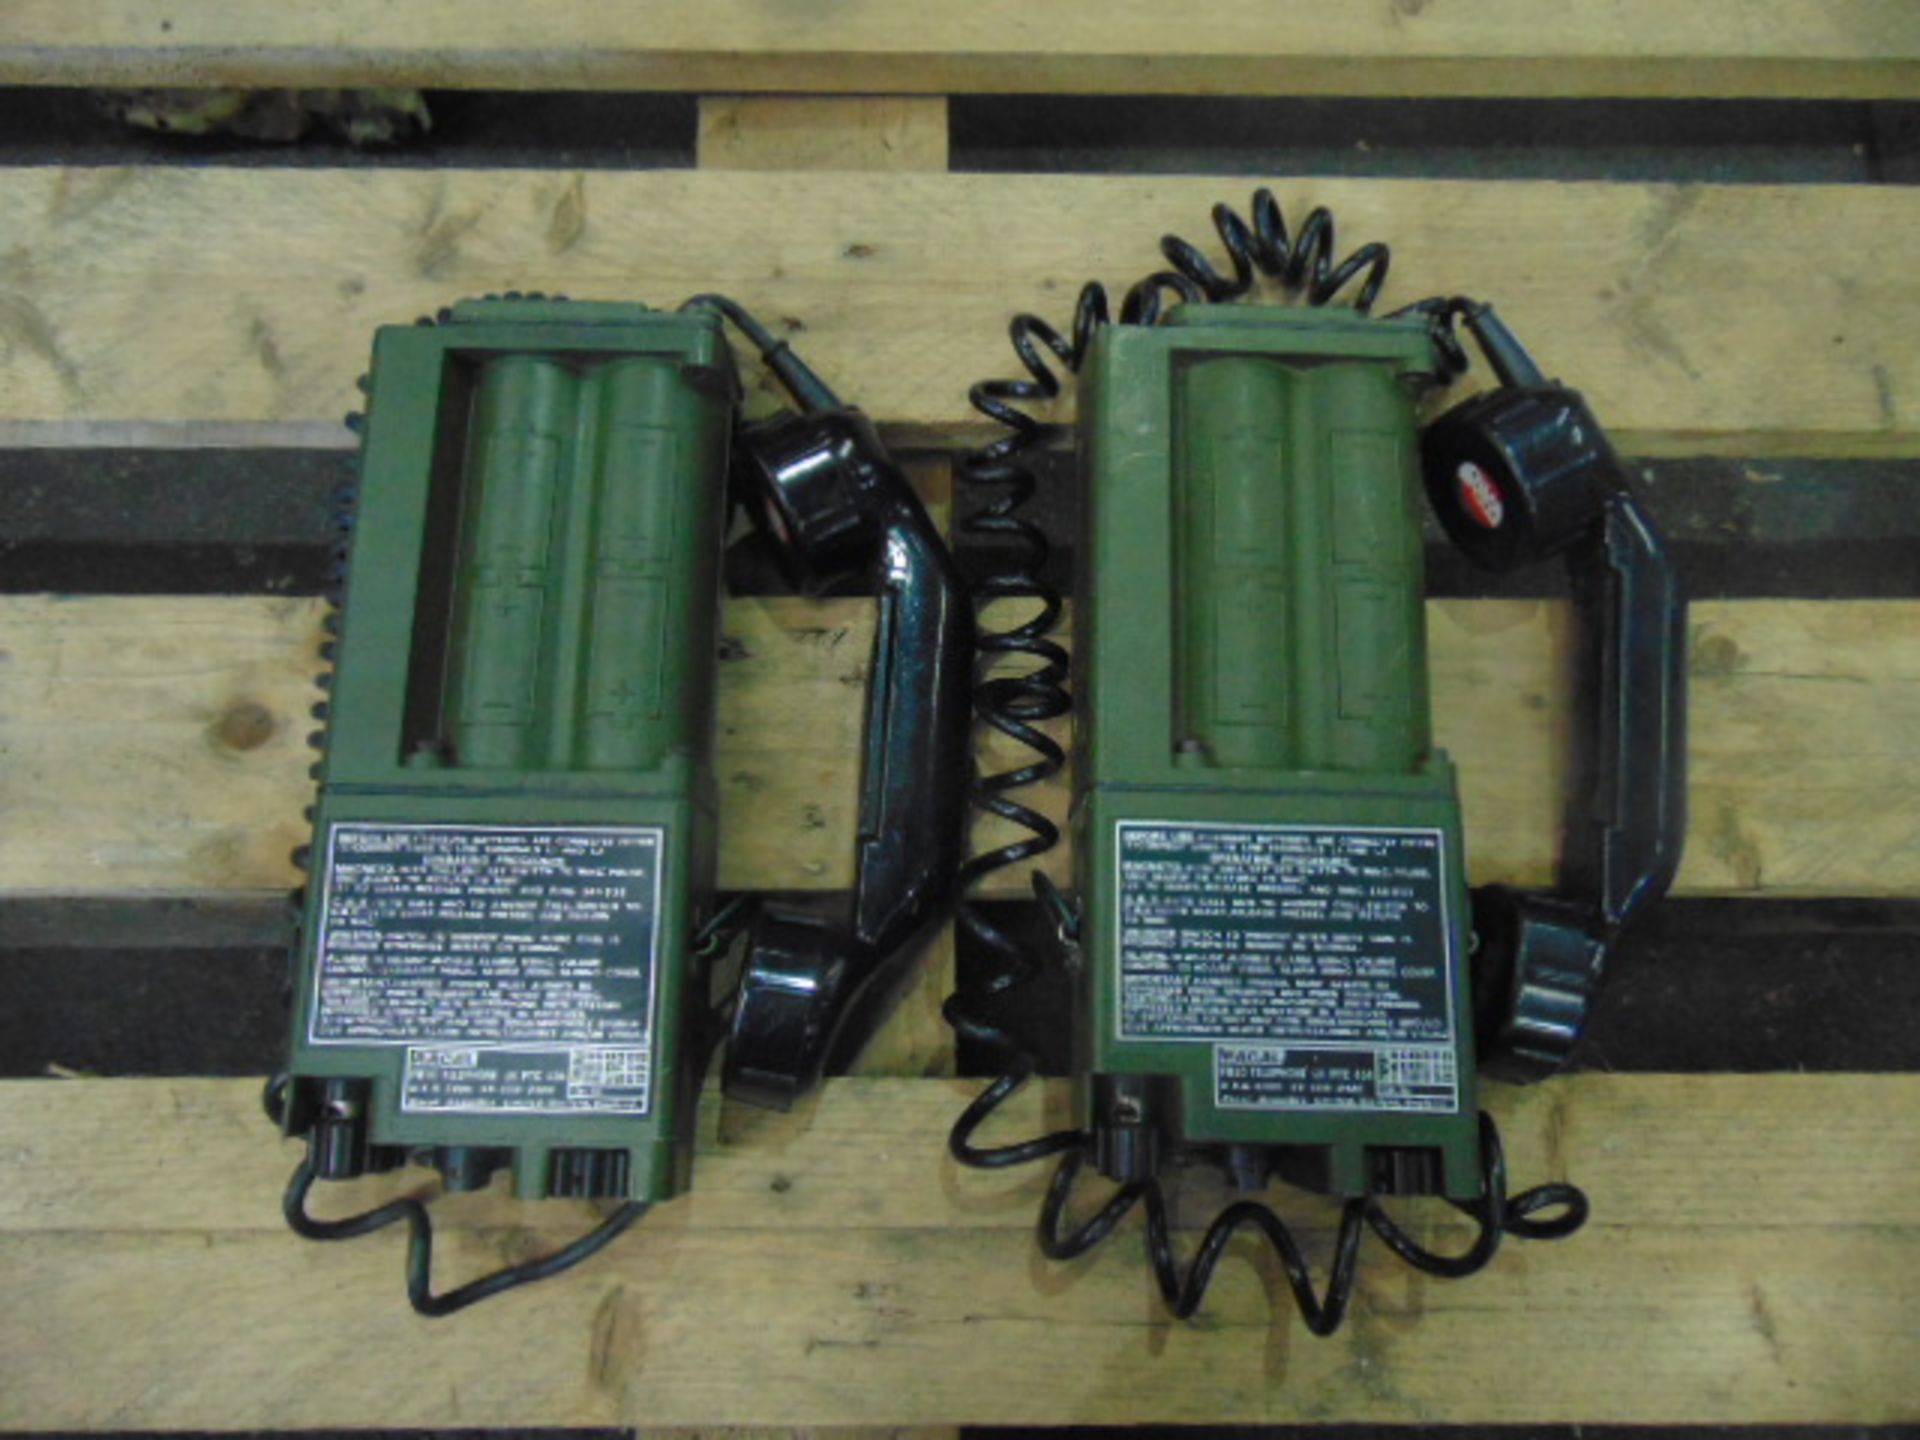 2 x Racal PTC404 Field Telephones